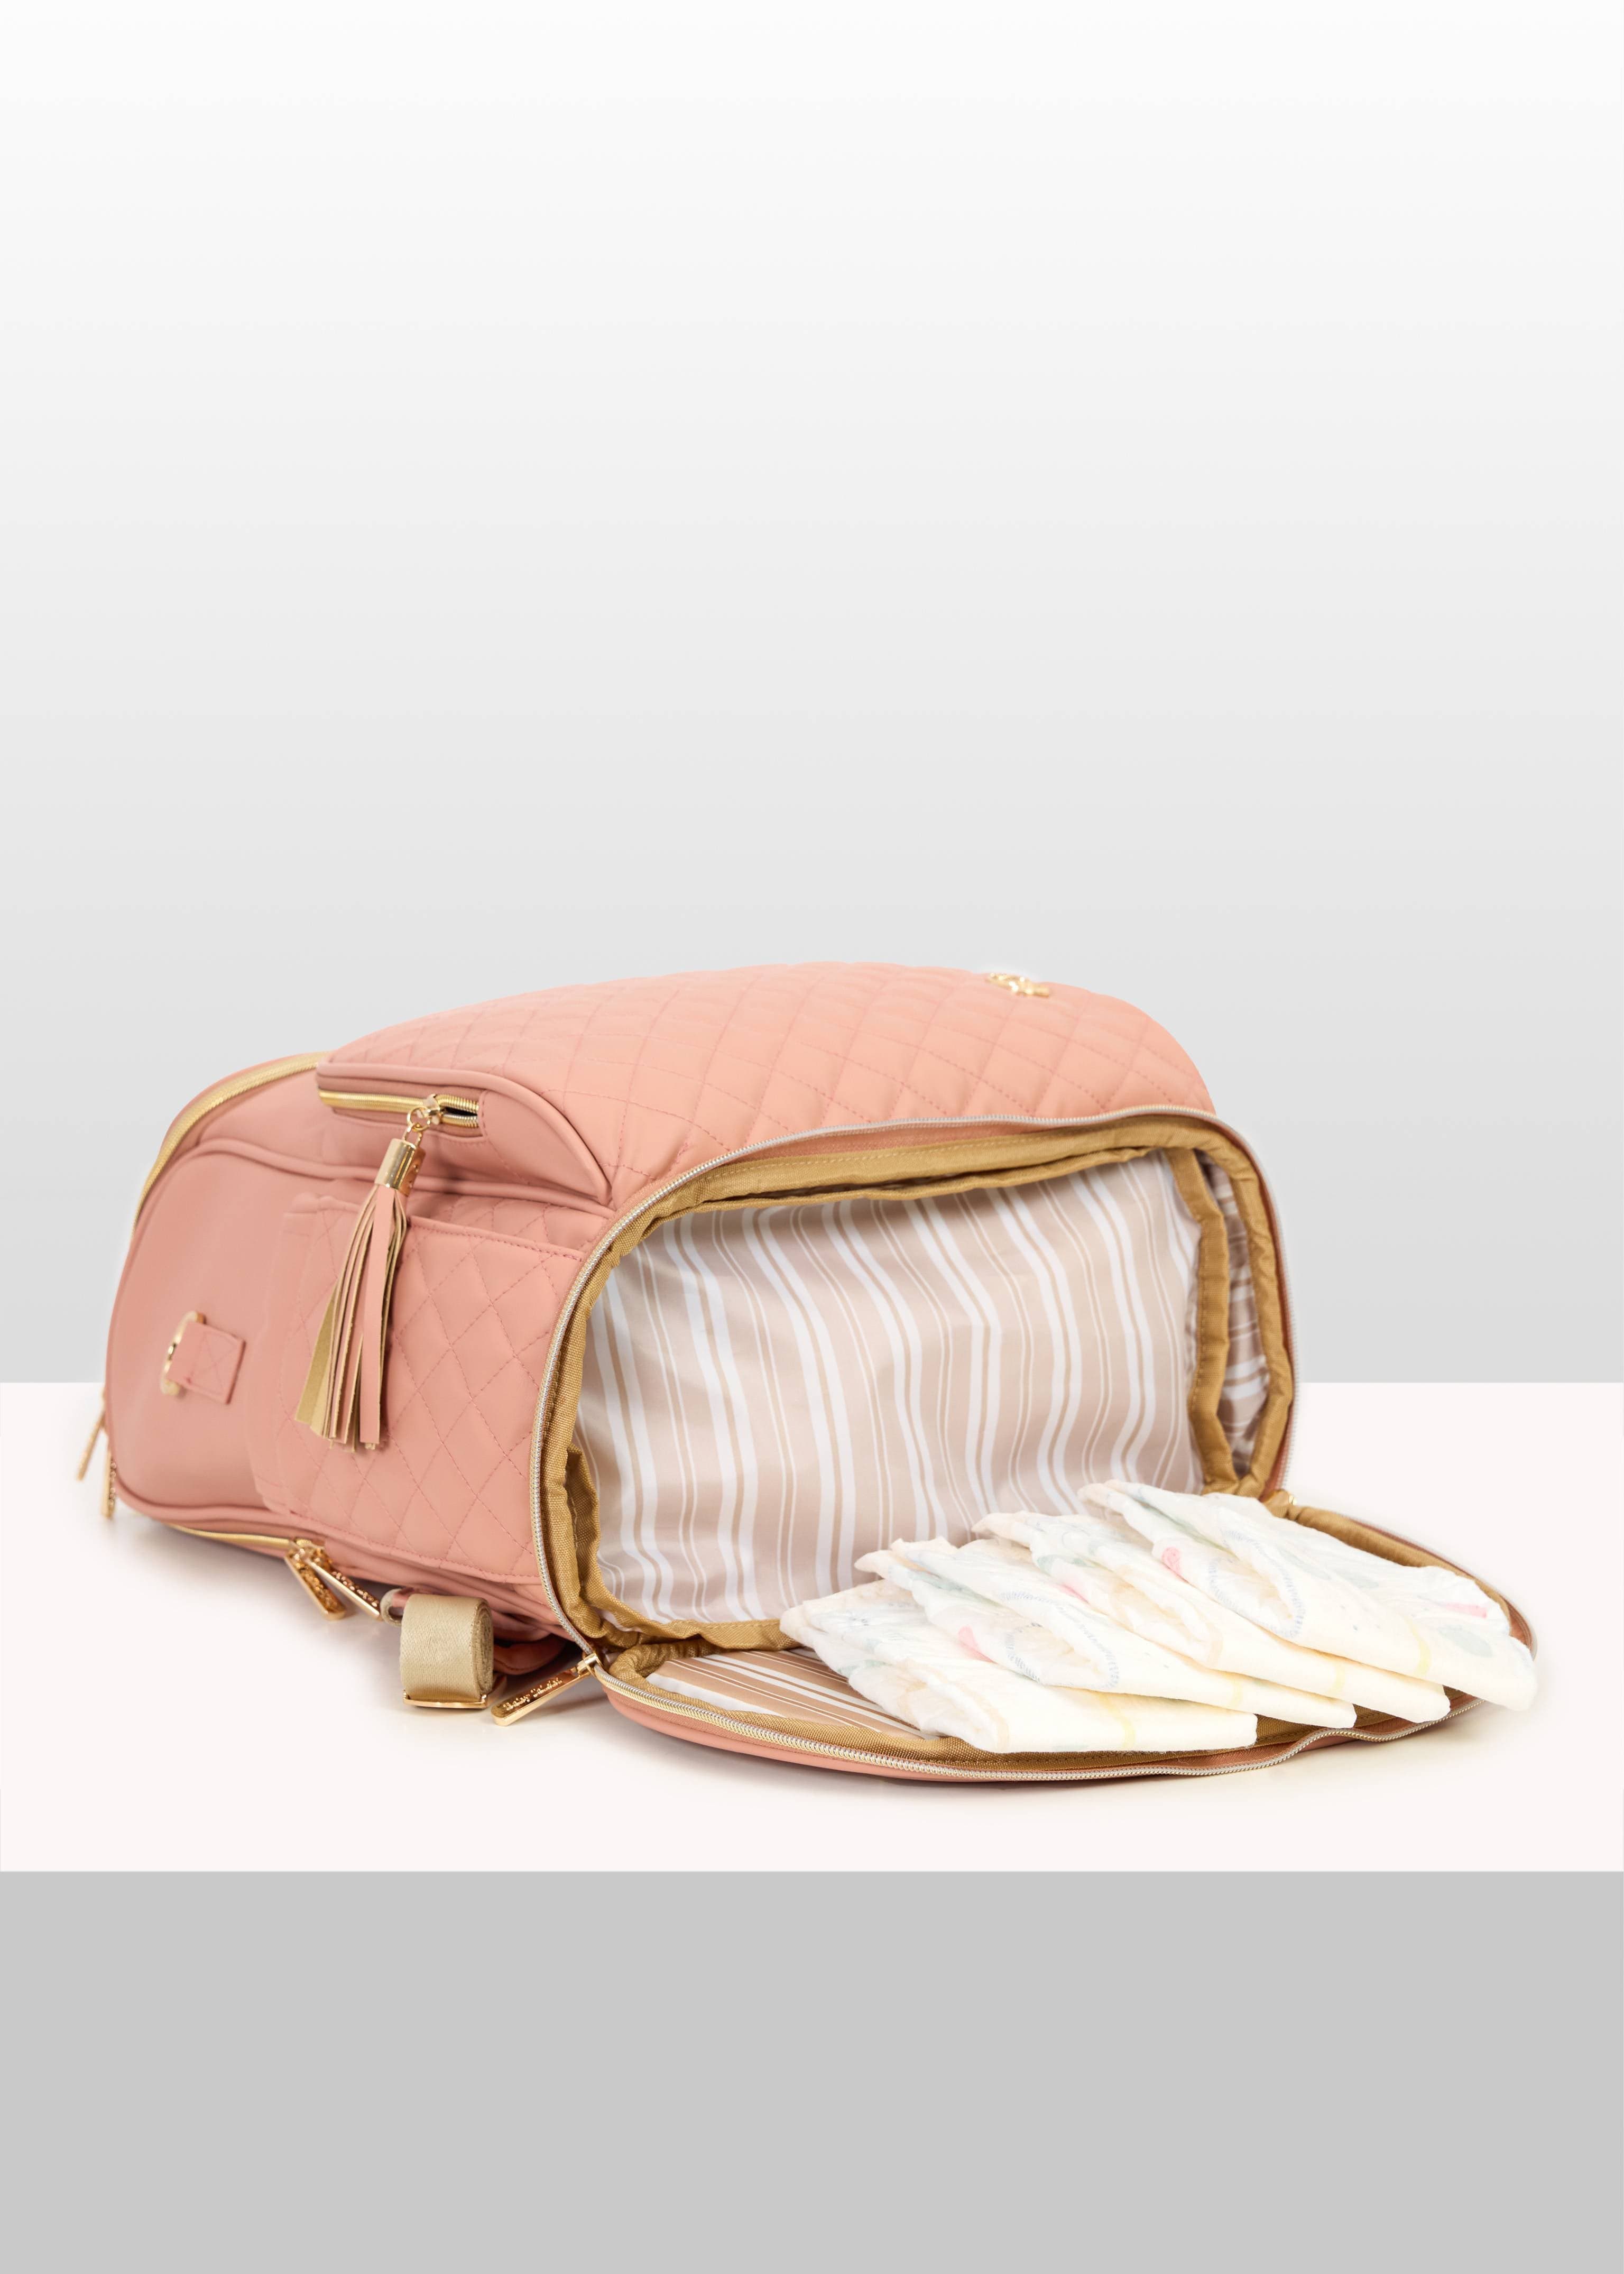 The Super Trooper Luxe Diaper Bag - Miami Pink